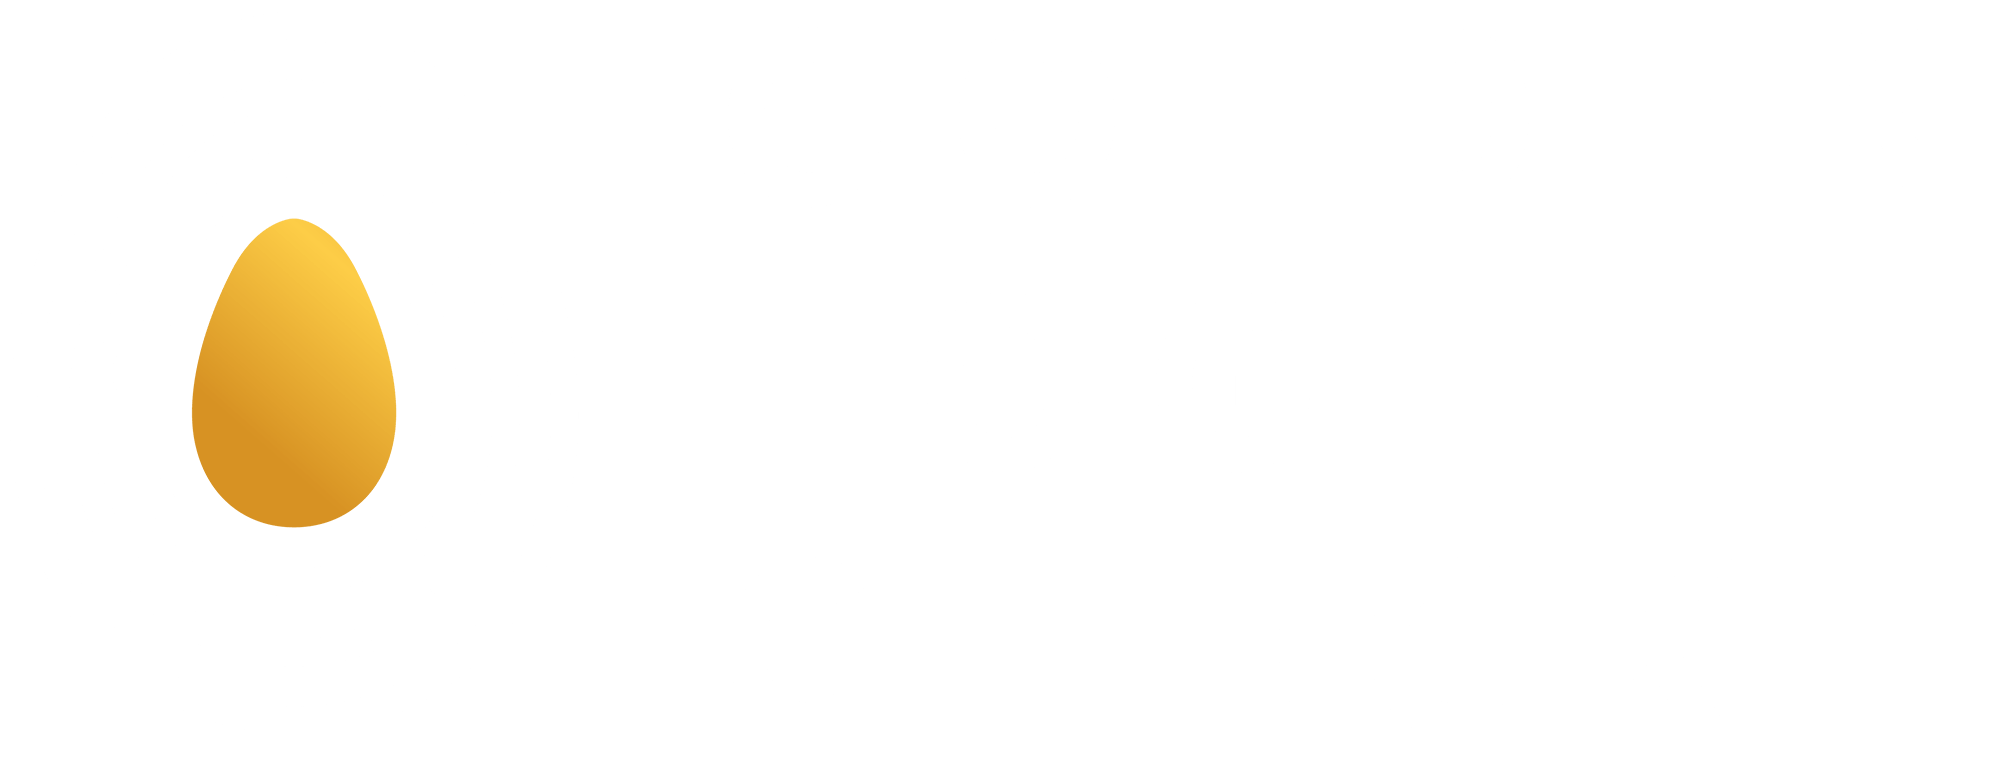 Golden Egg Check logo